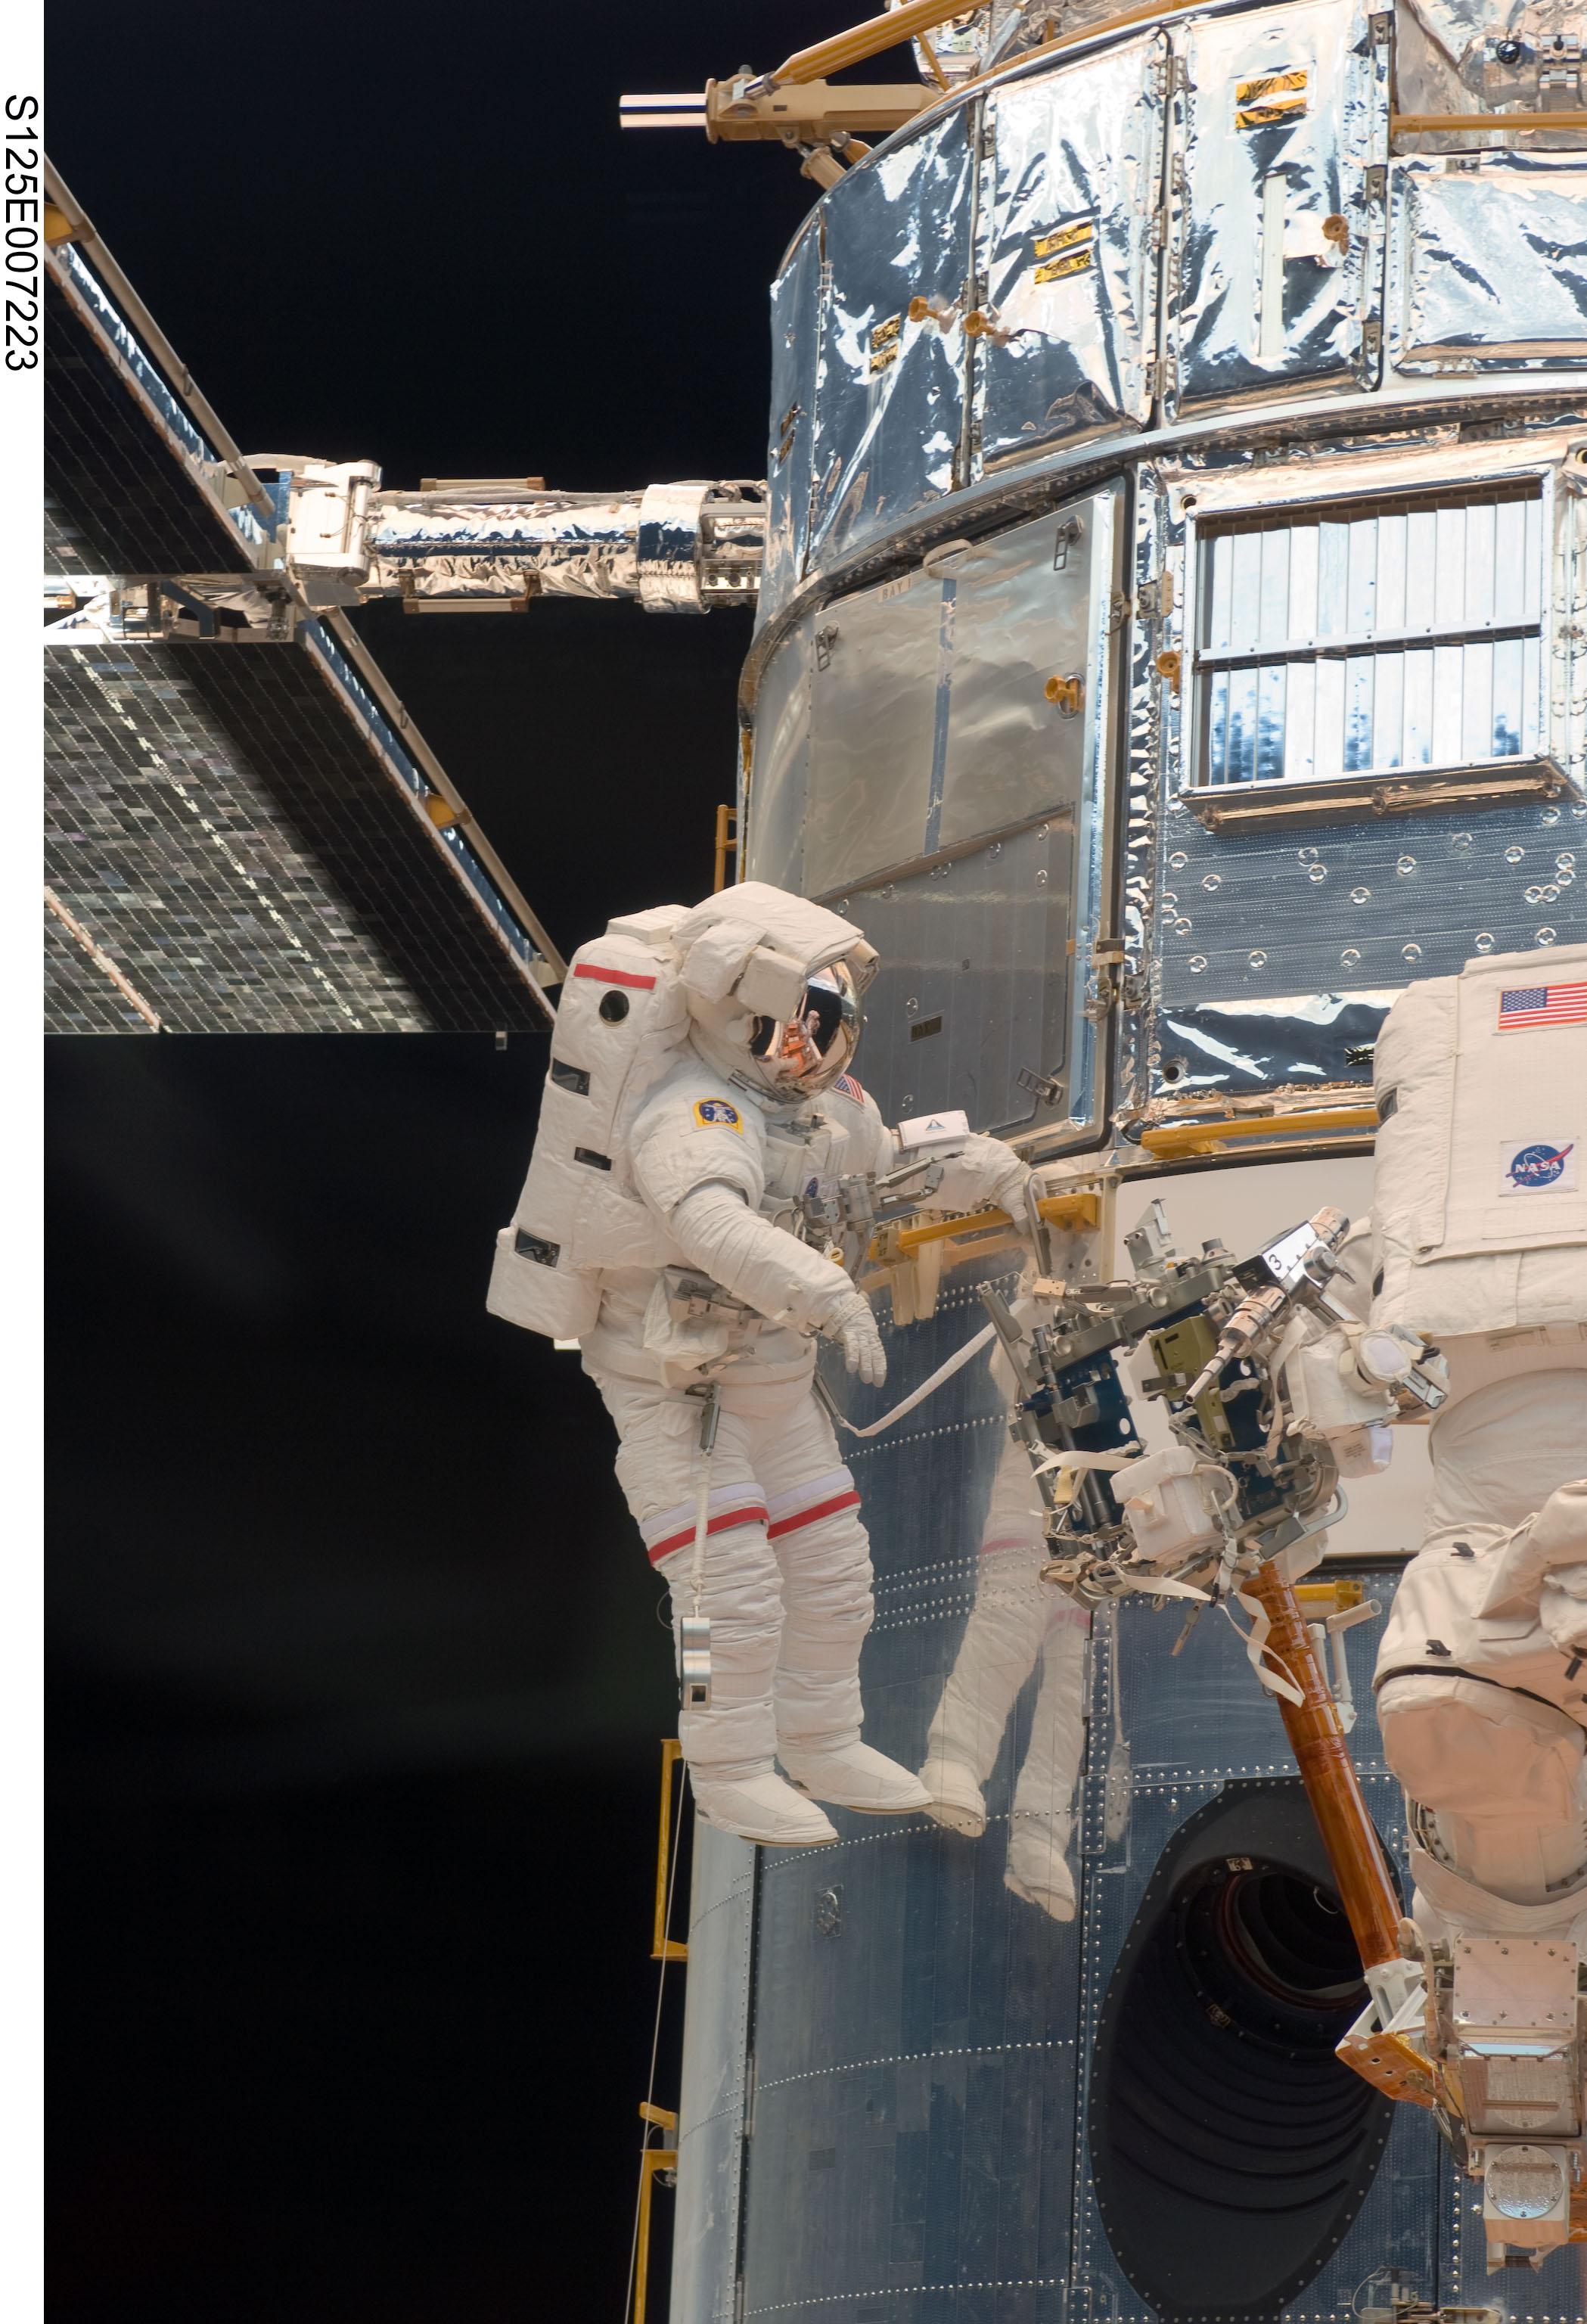 Astronaut fixing Hubble telescope satellite